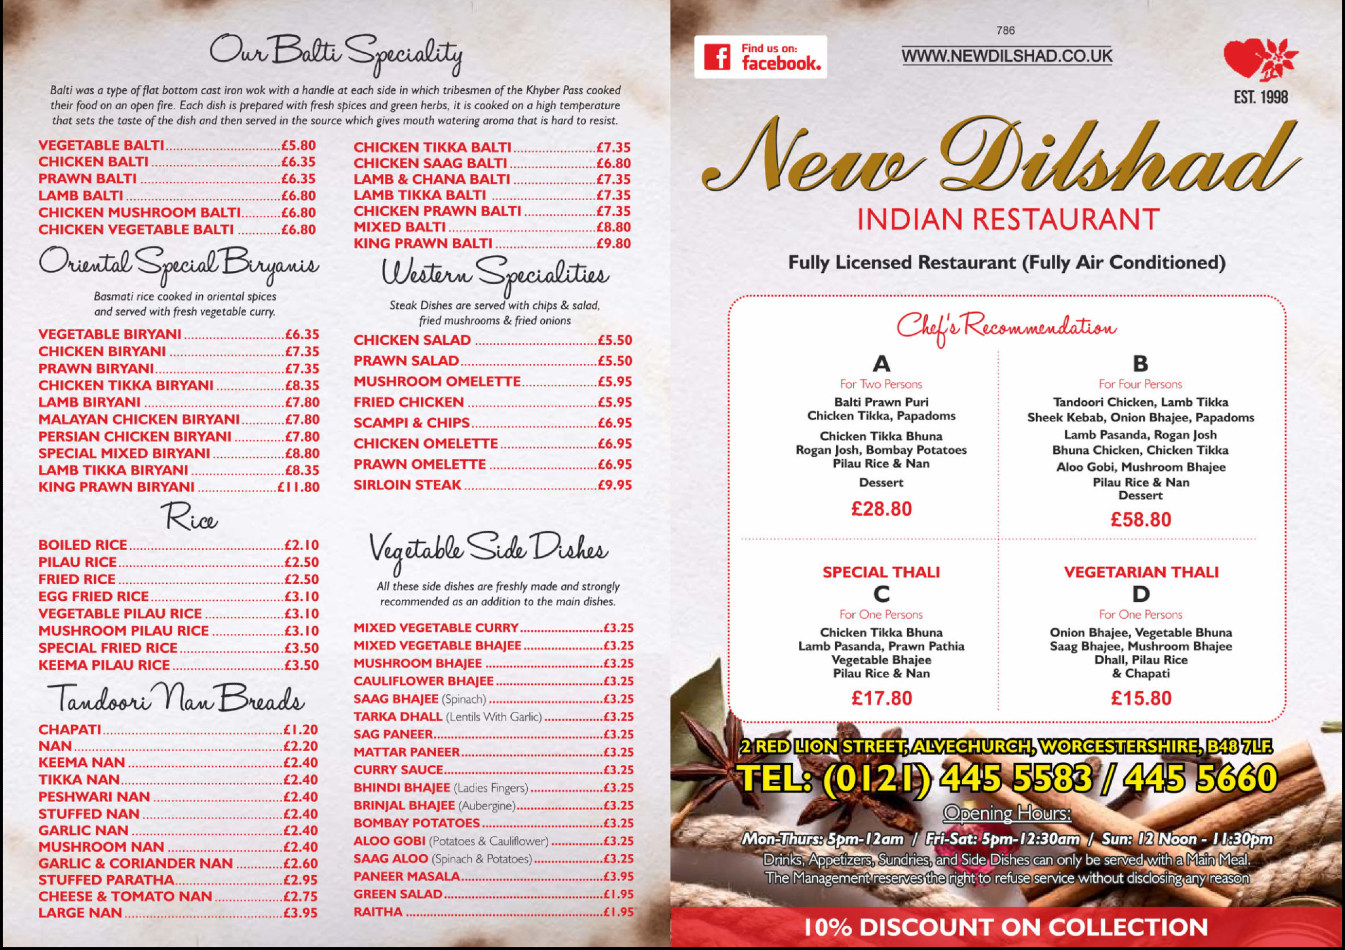 Takeaway Restaurant Menu Page - The New Dilshad Indian restaurant Alvechurch - Birmingham